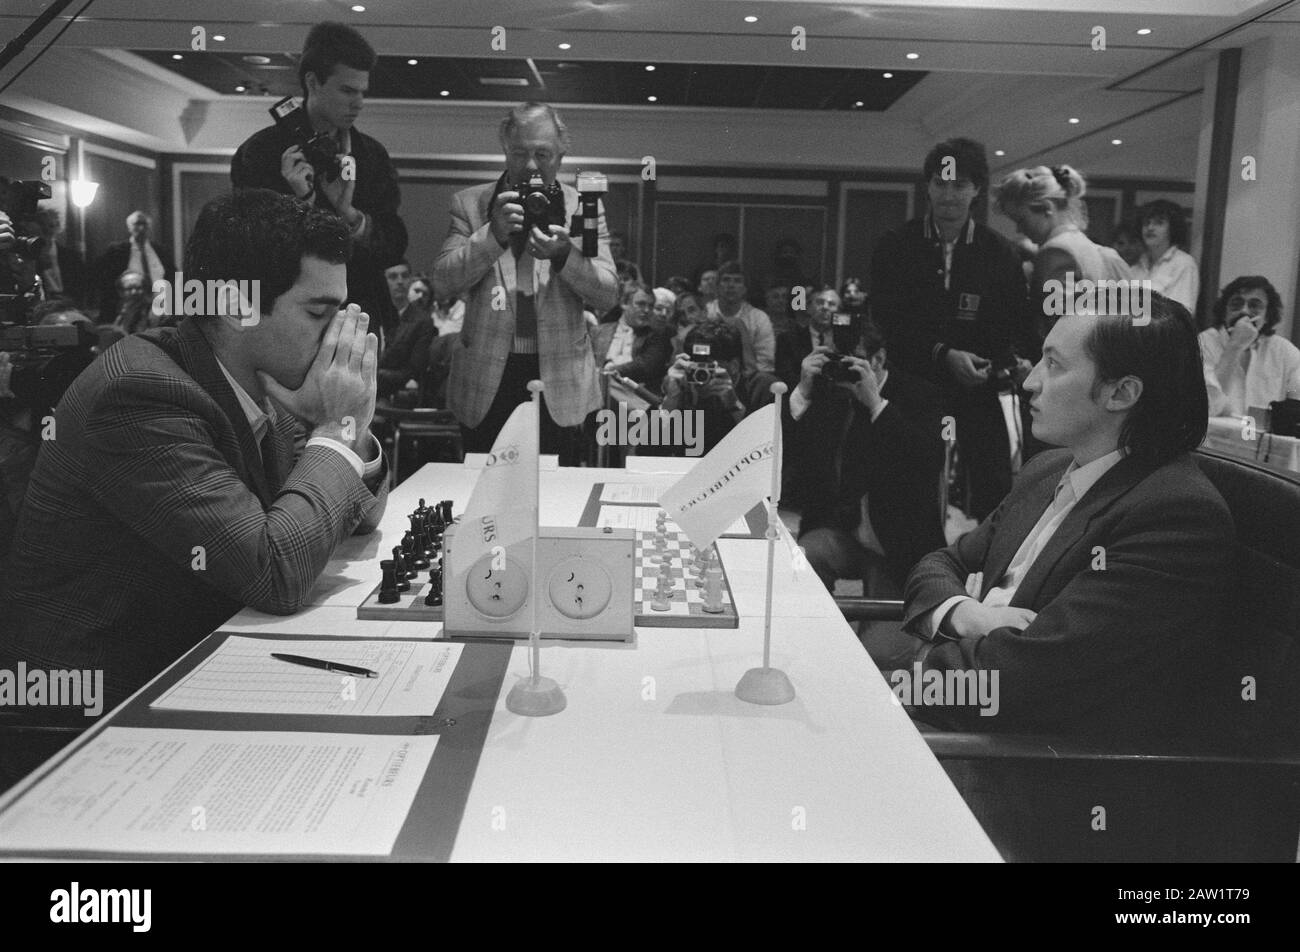 The World S Great Chess Games: Karpov - Kasparov Stock Illustration -  Illustration of karpov, entertainment: 42605407